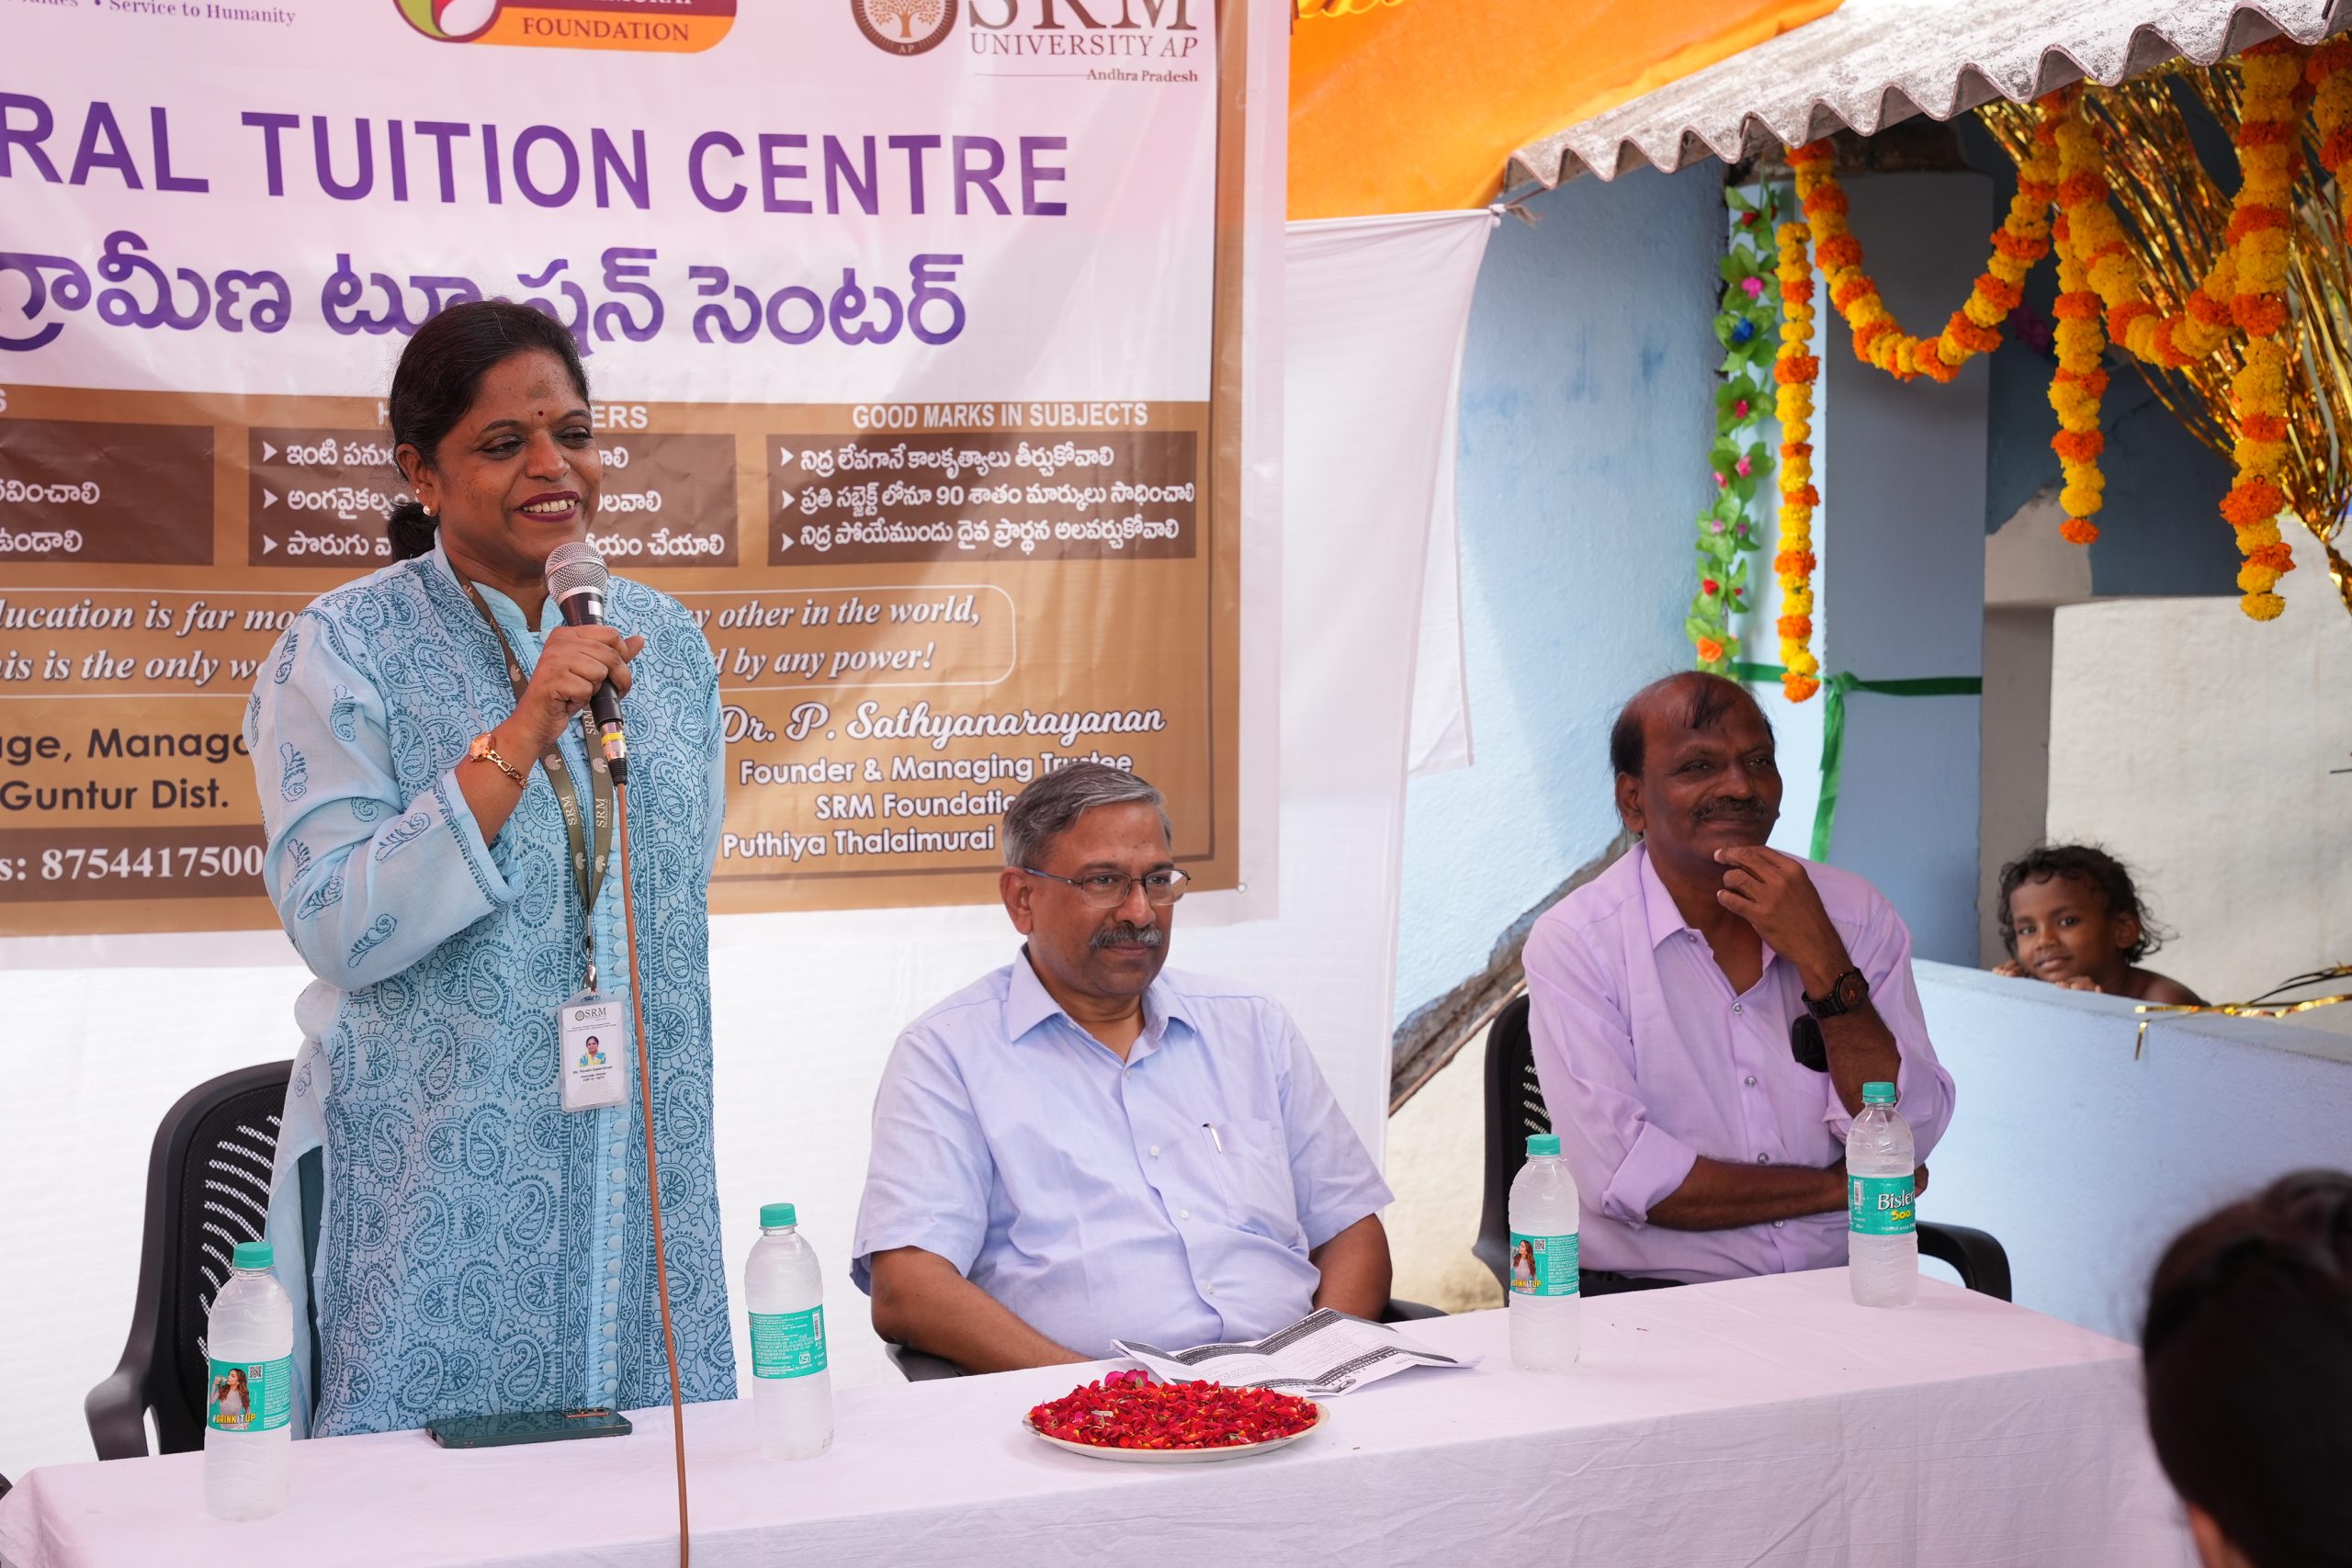 Mrs. Revathy Balakrishnan  Associate Director – Students Affairs, SRM University AP, Guntur District, Andhra Pradesh